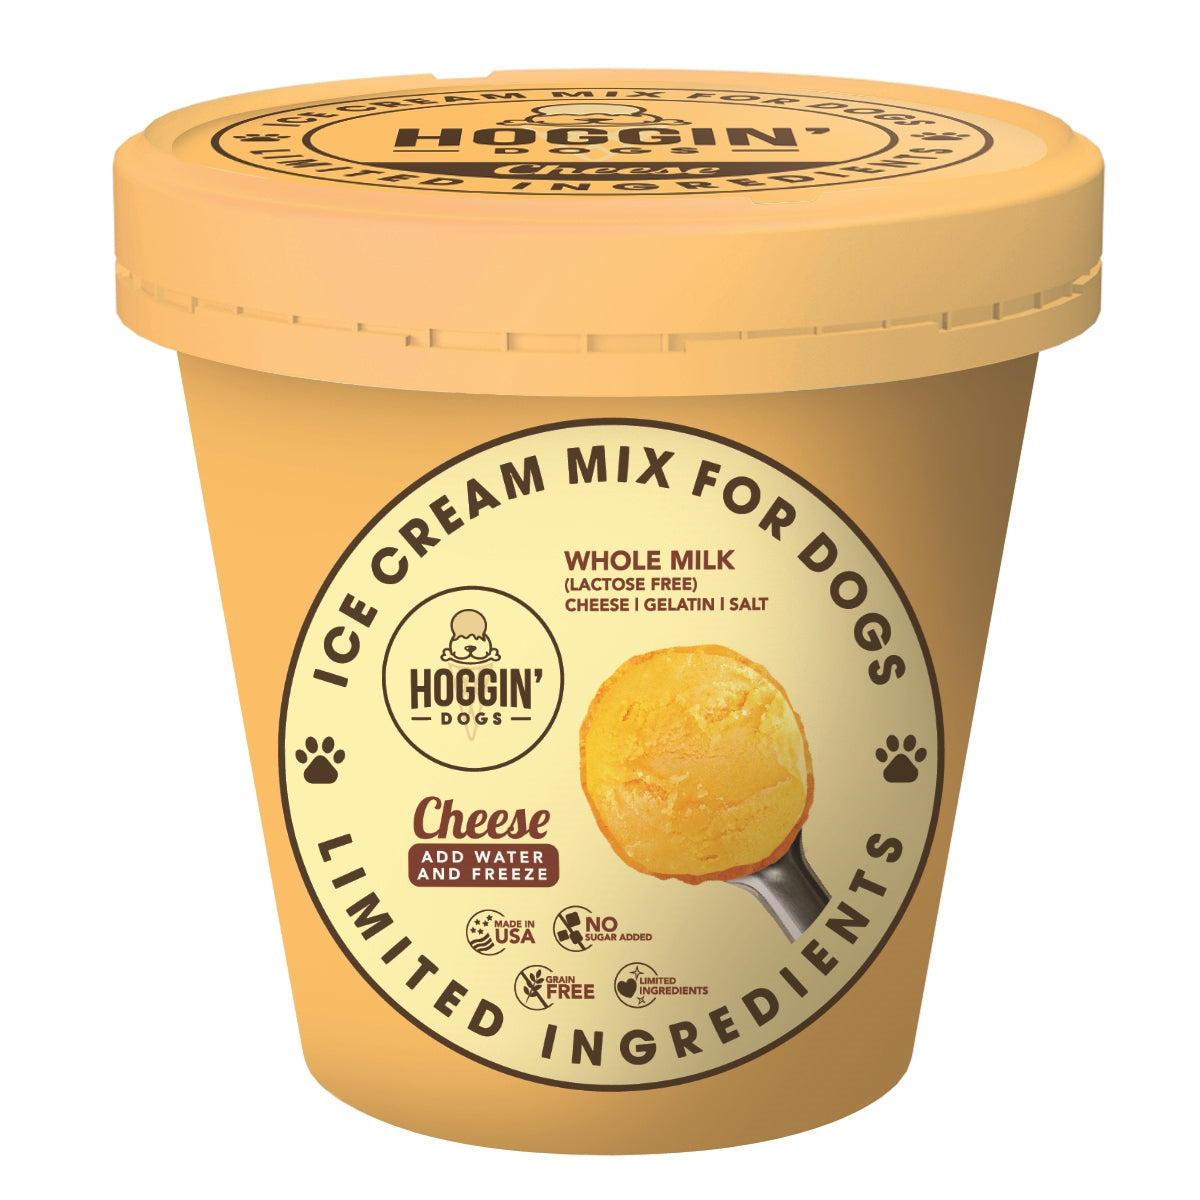 Hoggin' Dogs Ice Cream Mix - Cheese